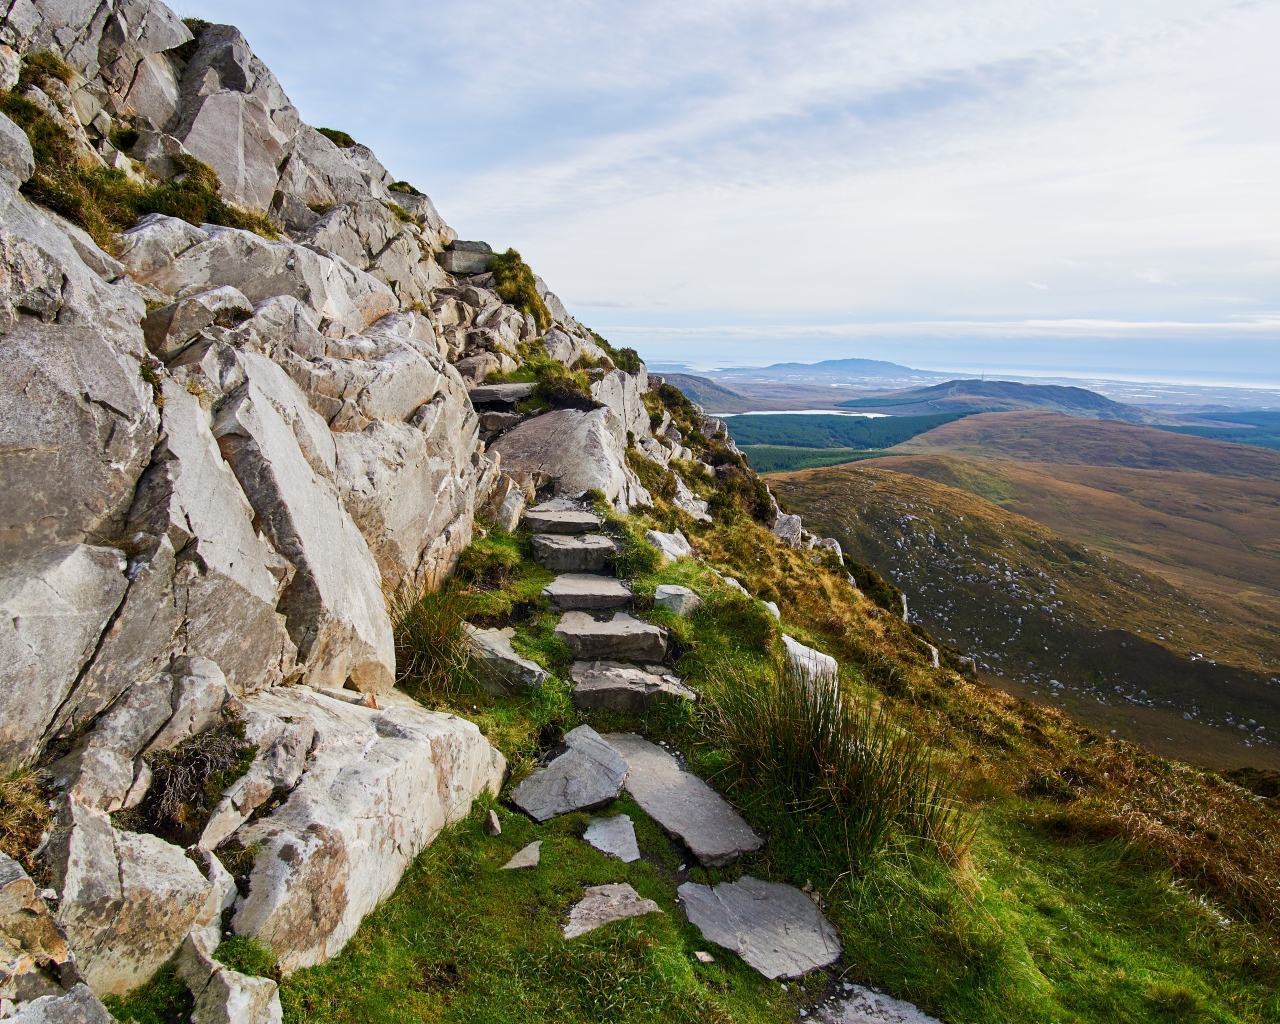 Stone path to the mountains